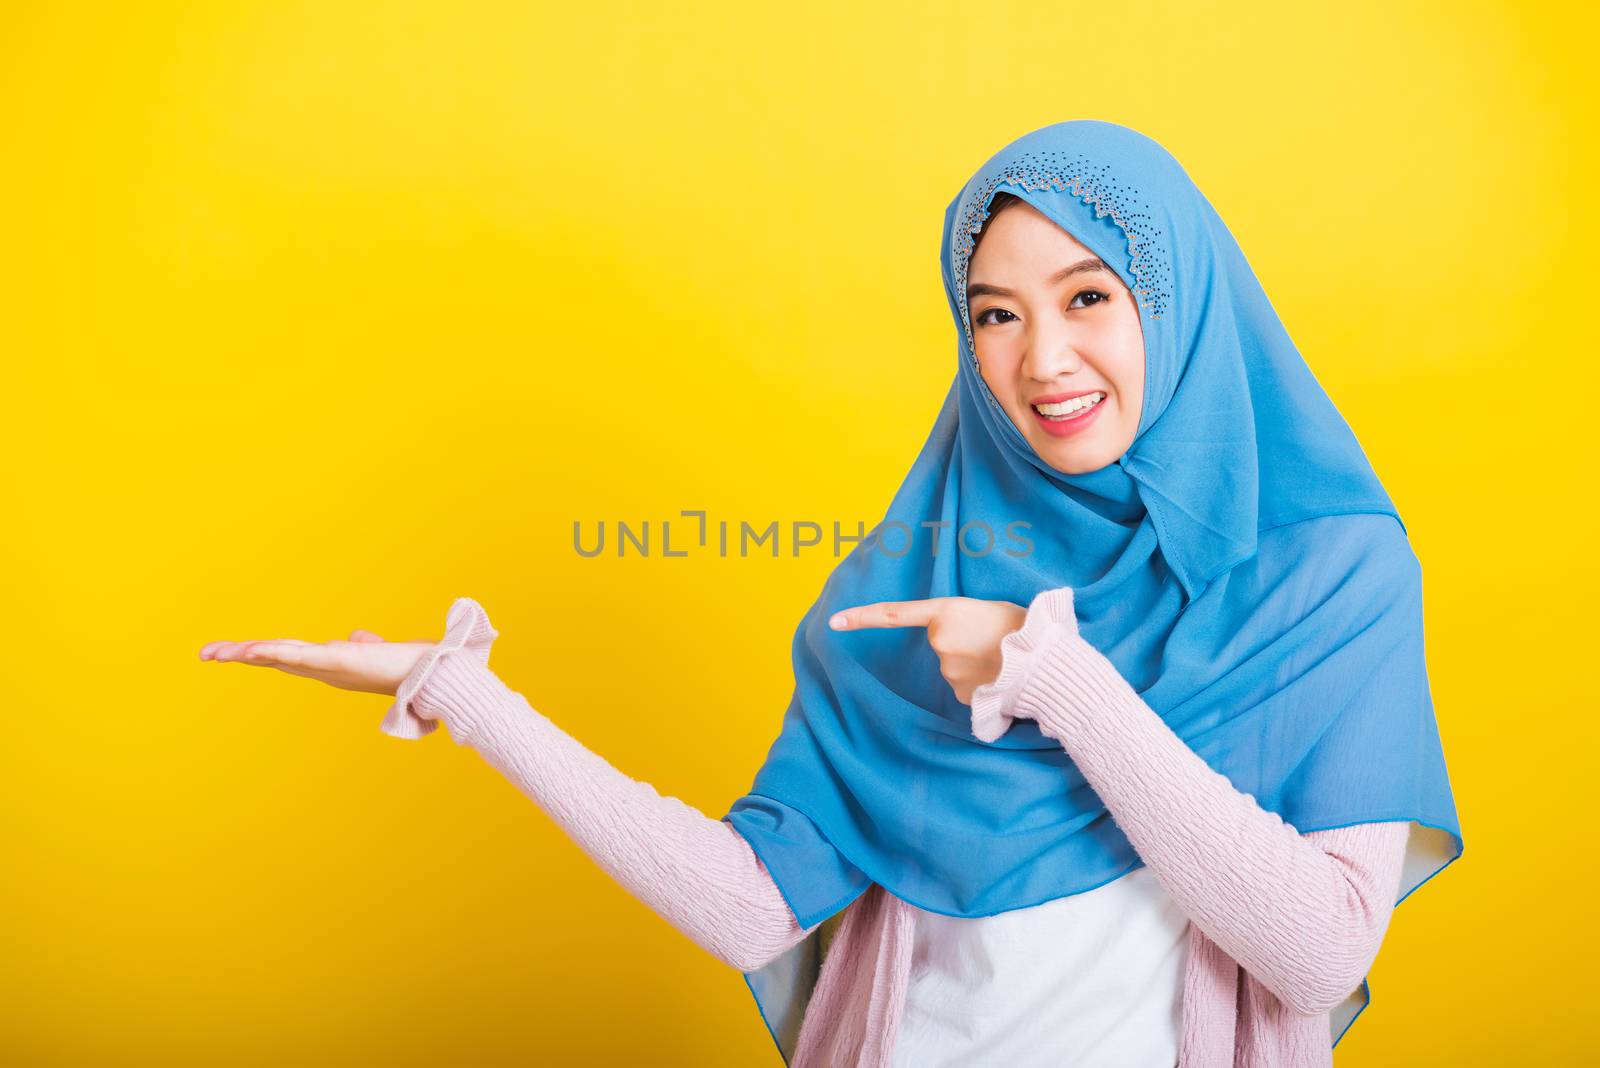 Asian Muslim Arab woman Islam wear hijab smile she positive expr by Sorapop